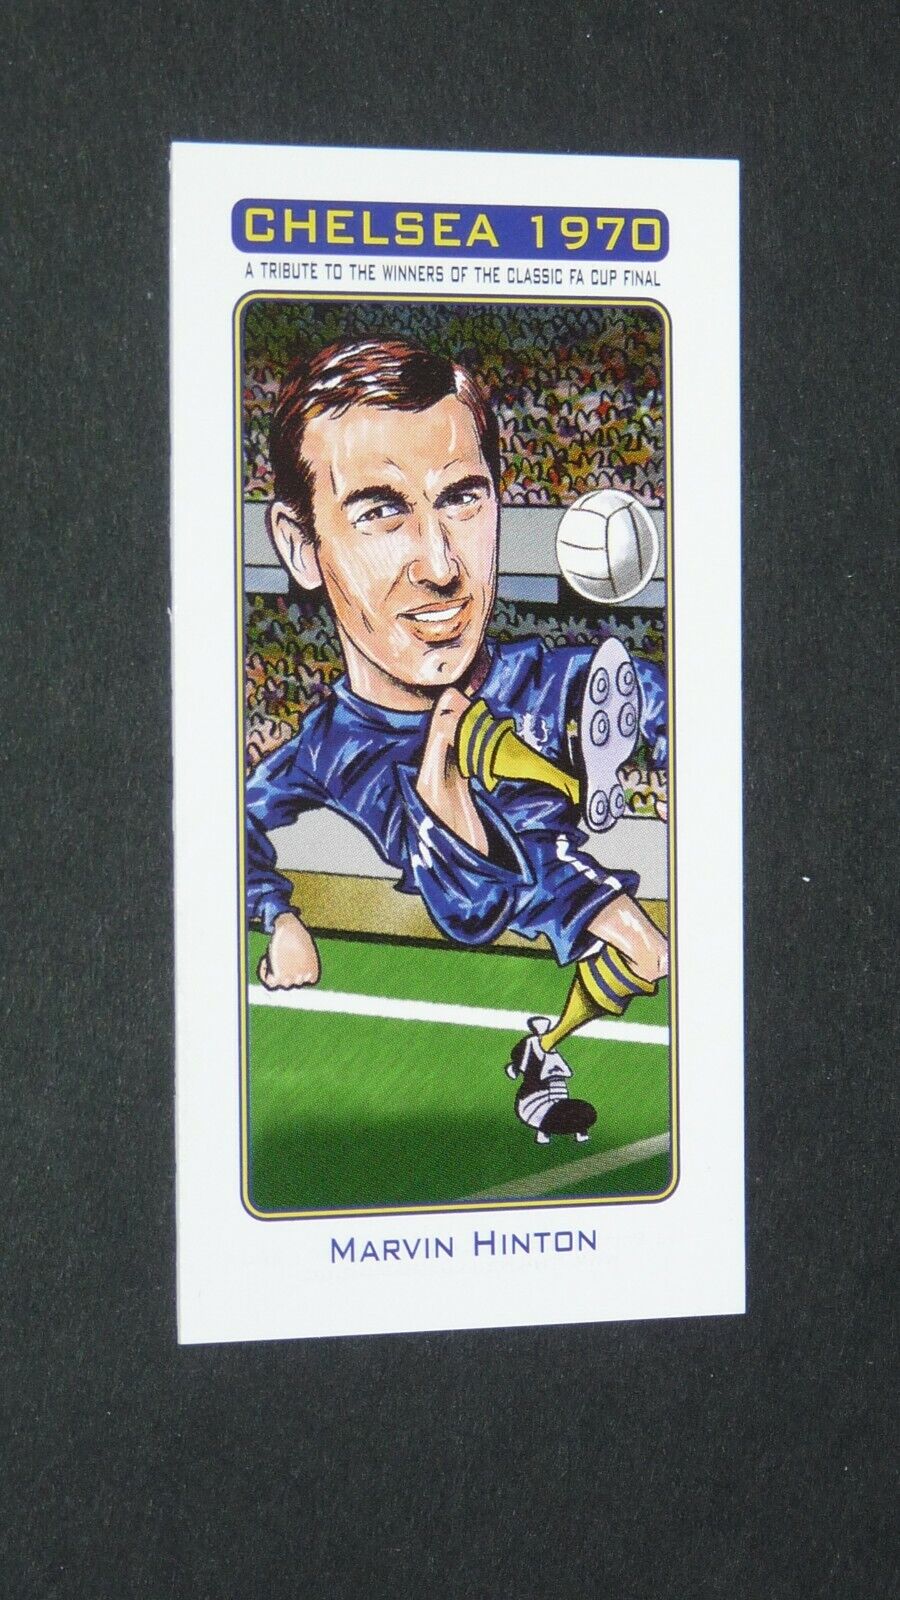 2008 PHILIP NEILL CARD FOOTBALL CHELSEA BLUES FA CUP 1970 #12 MARVIN HINTON